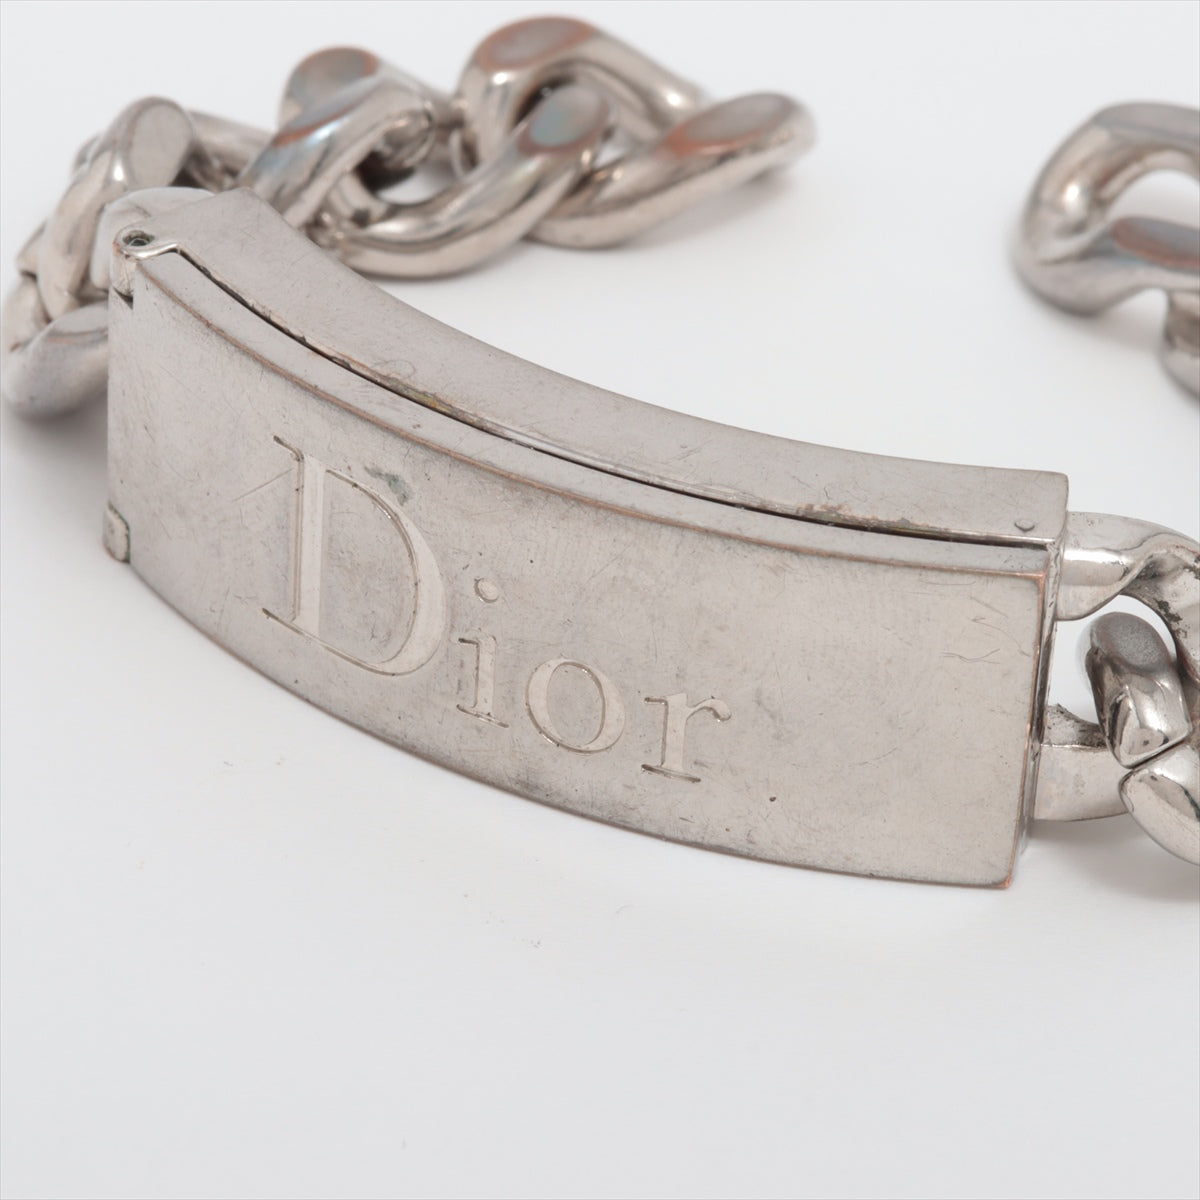 DIOR Dior logo Bracelet GP Silver